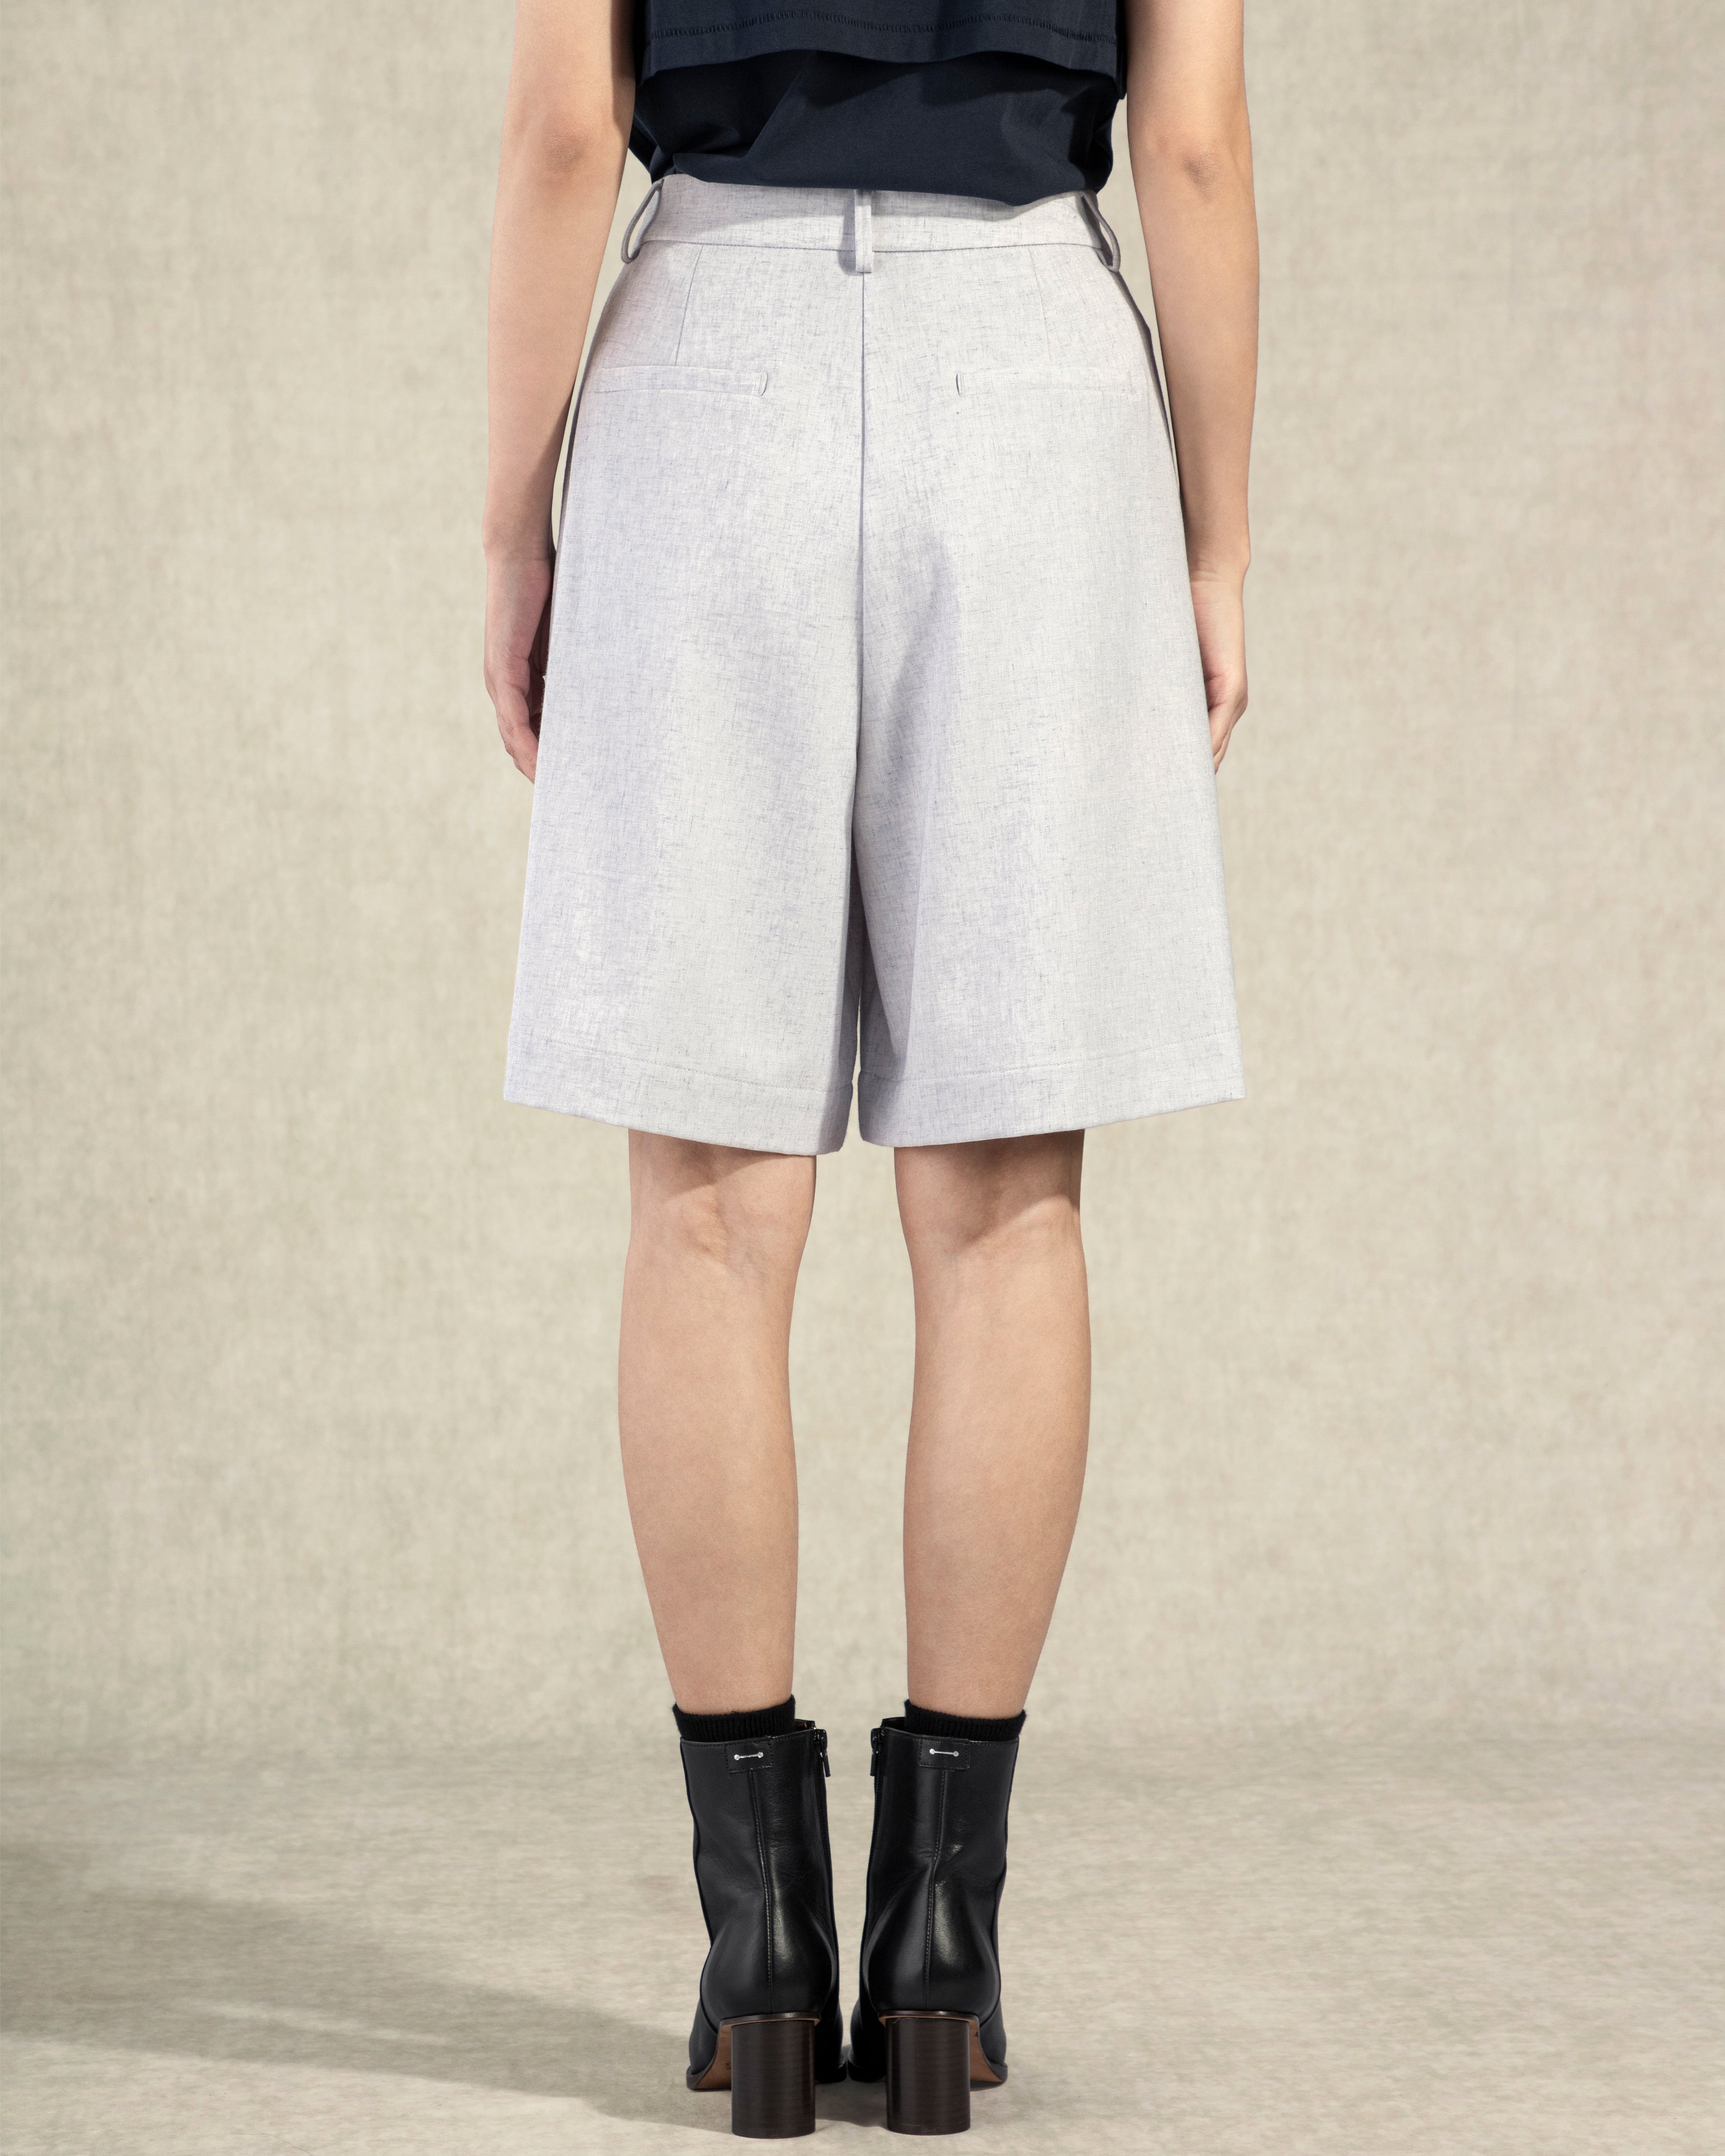 Flint Grey Heather Pleated Shorts Womens Future Classics Polyester Shorts